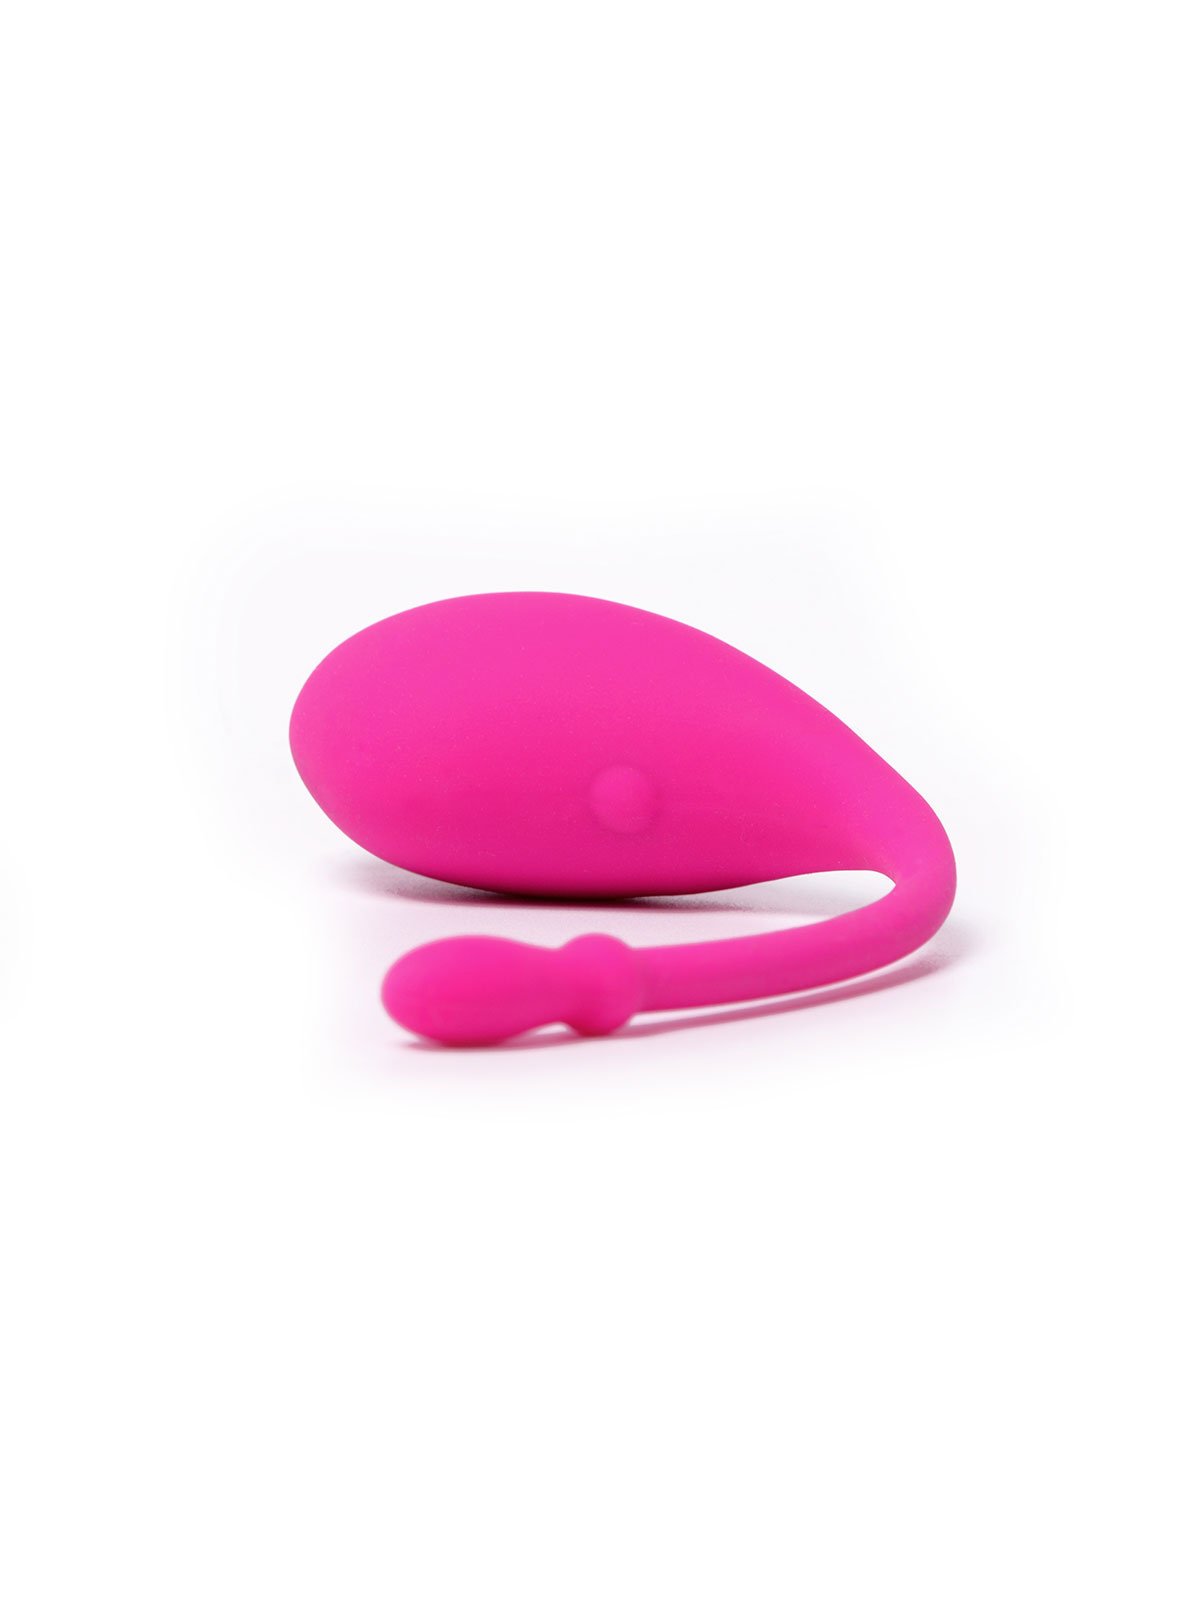 Plug Lush - Bluetooth Vibrator | Pink